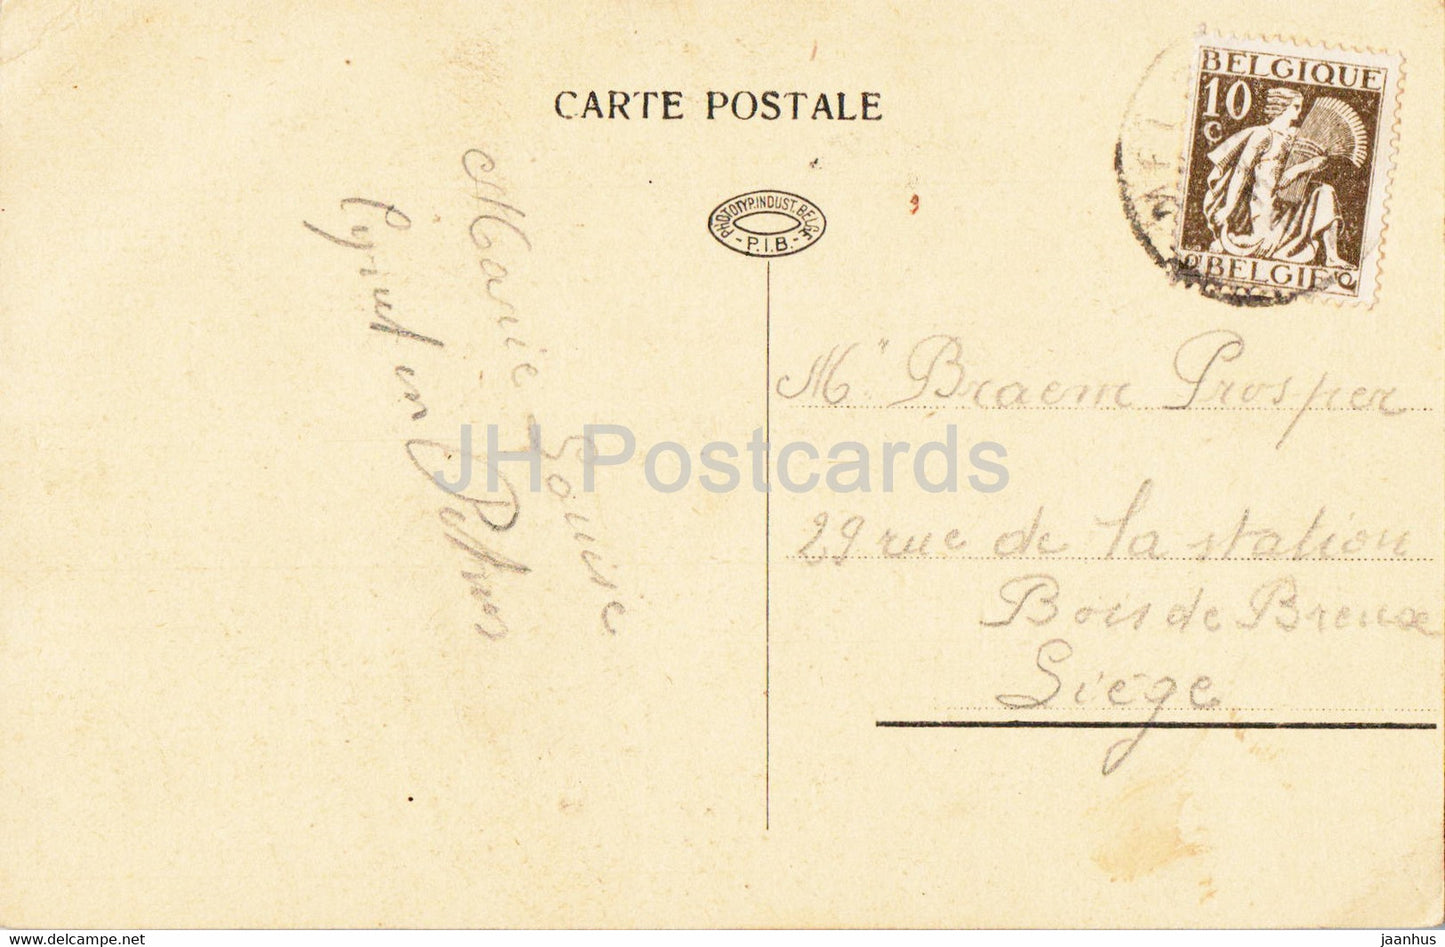 Melsele - Mirakuleuze - Linde van Gaverland - Kirche - alte Postkarte - Belgien - gebraucht